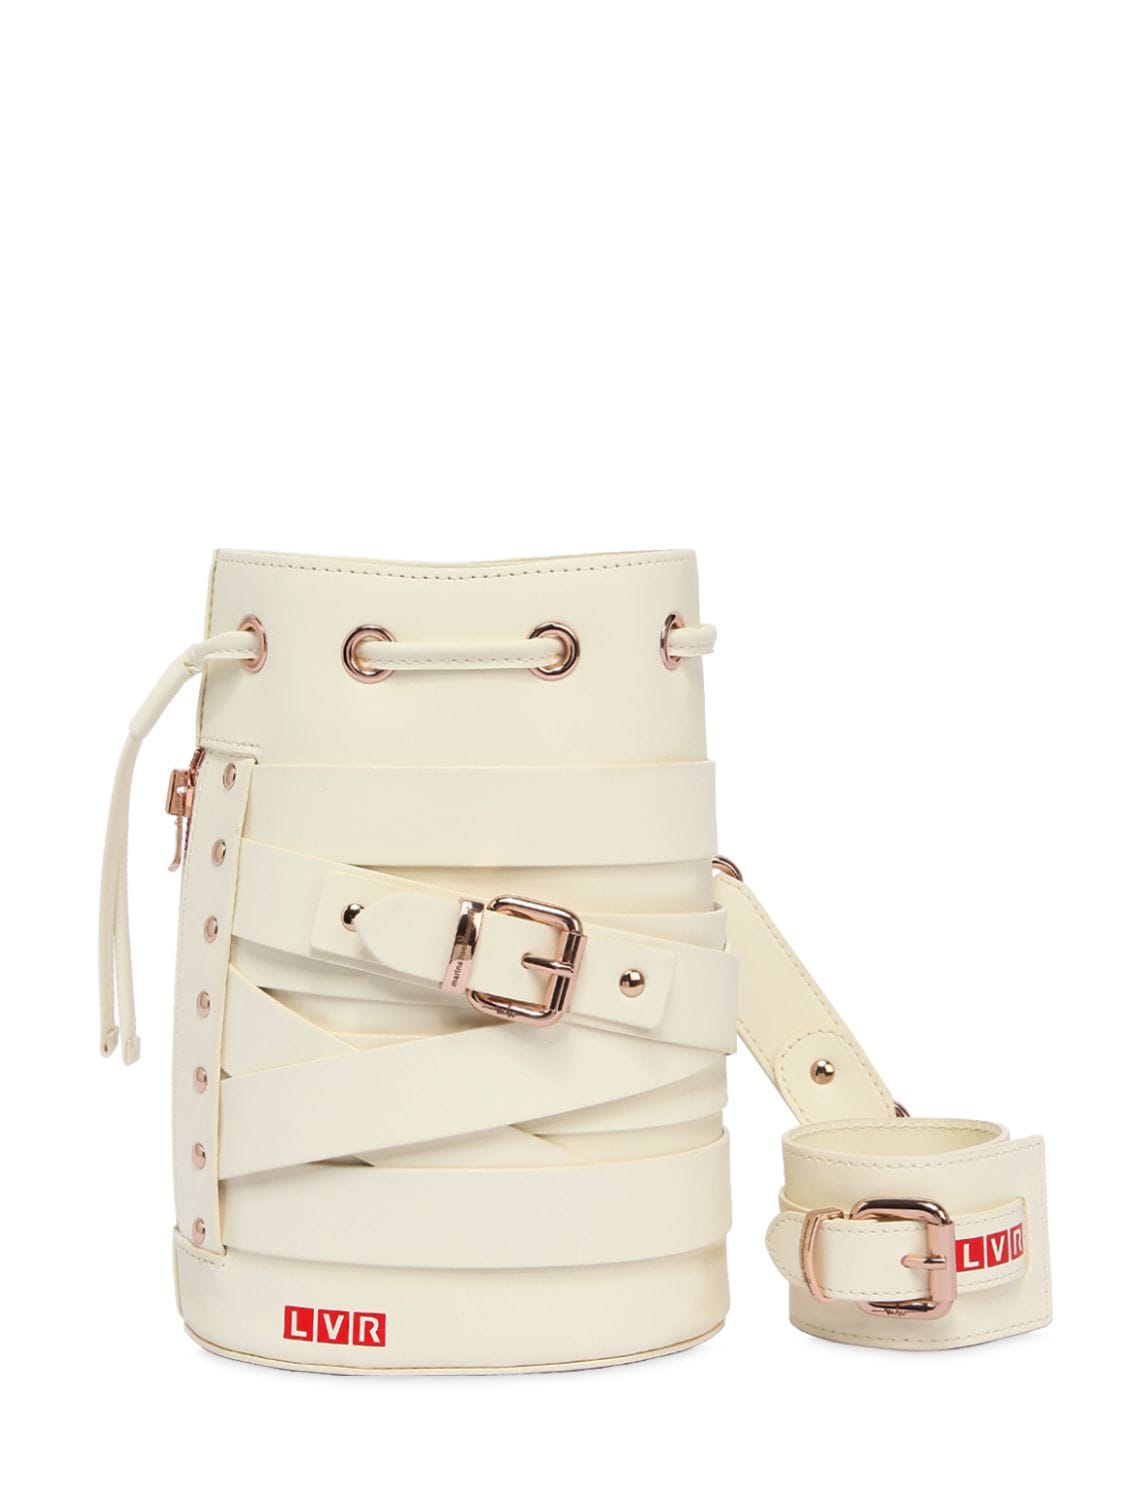 Marina Hoermanseder Lvr Editions Kasper Stripes Leather Bag In Off White